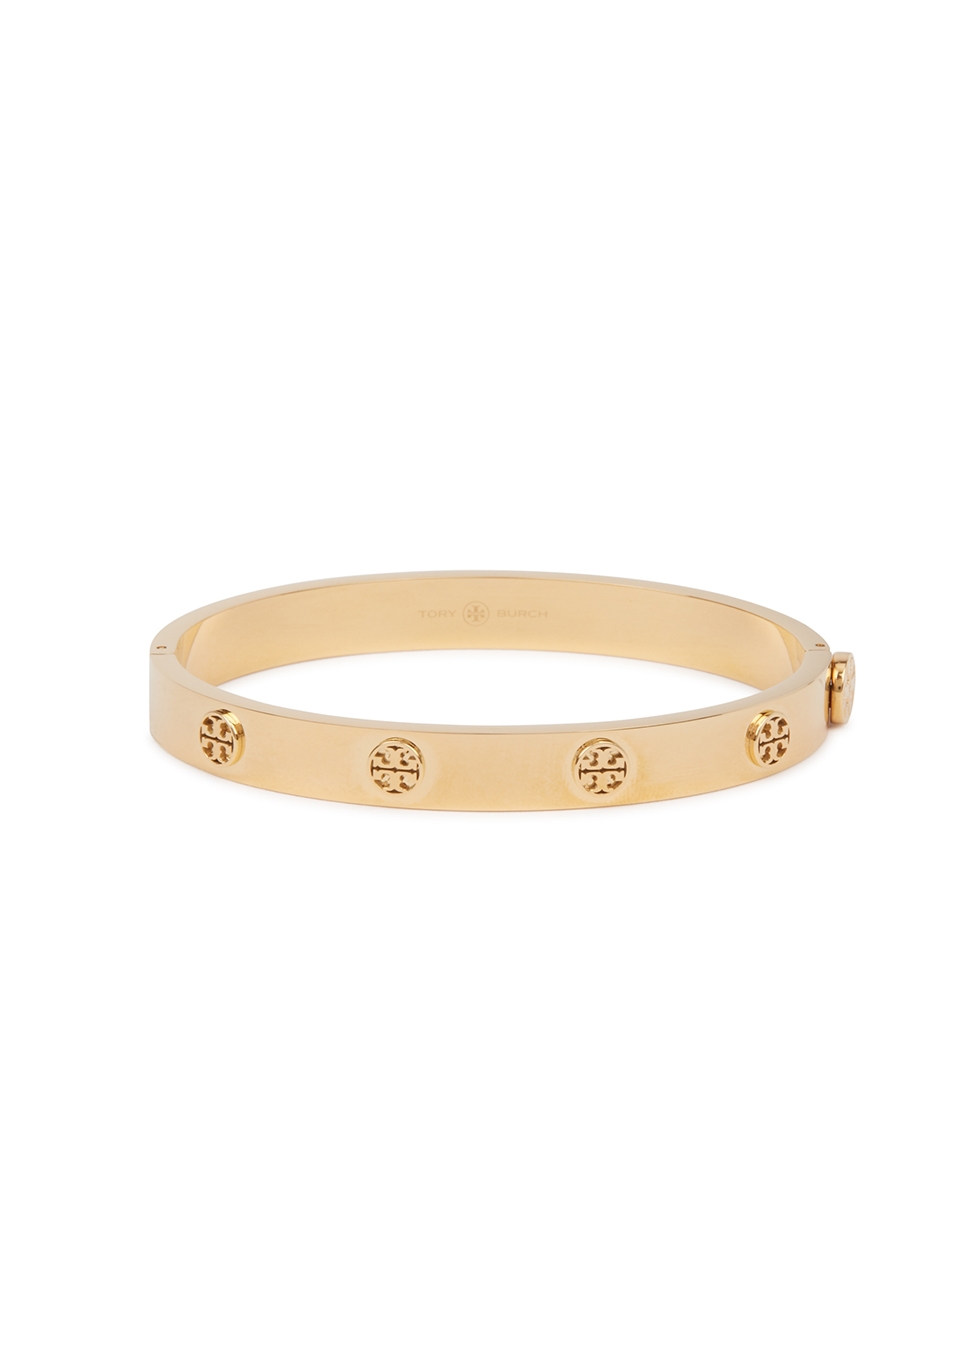 Tory Burch Miller logo 18kt gold-plated bracelet - Harvey Nichols